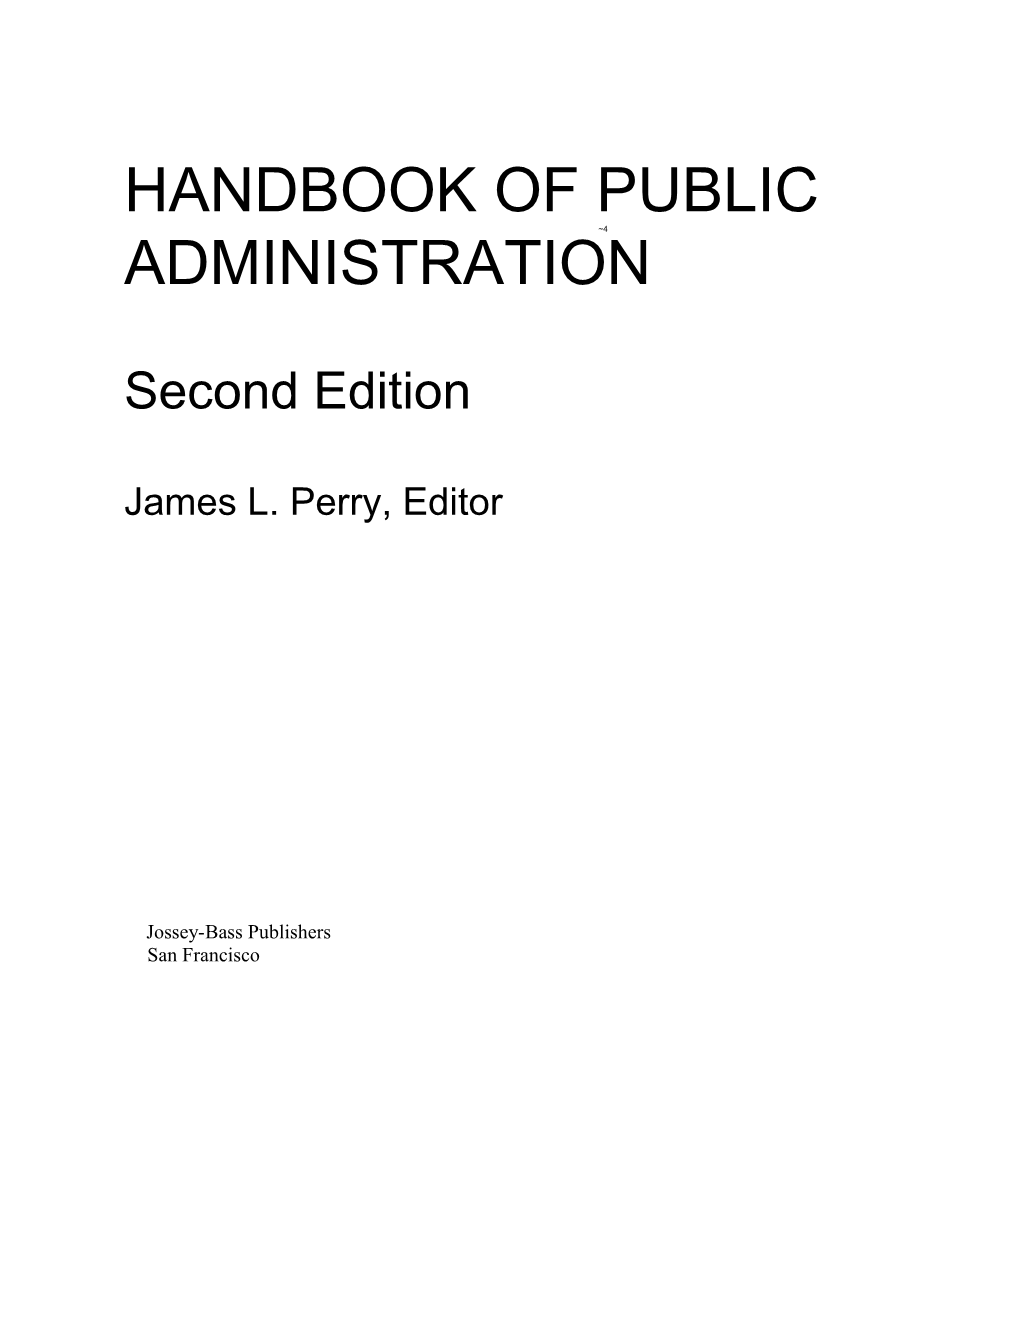 Handbook of Public